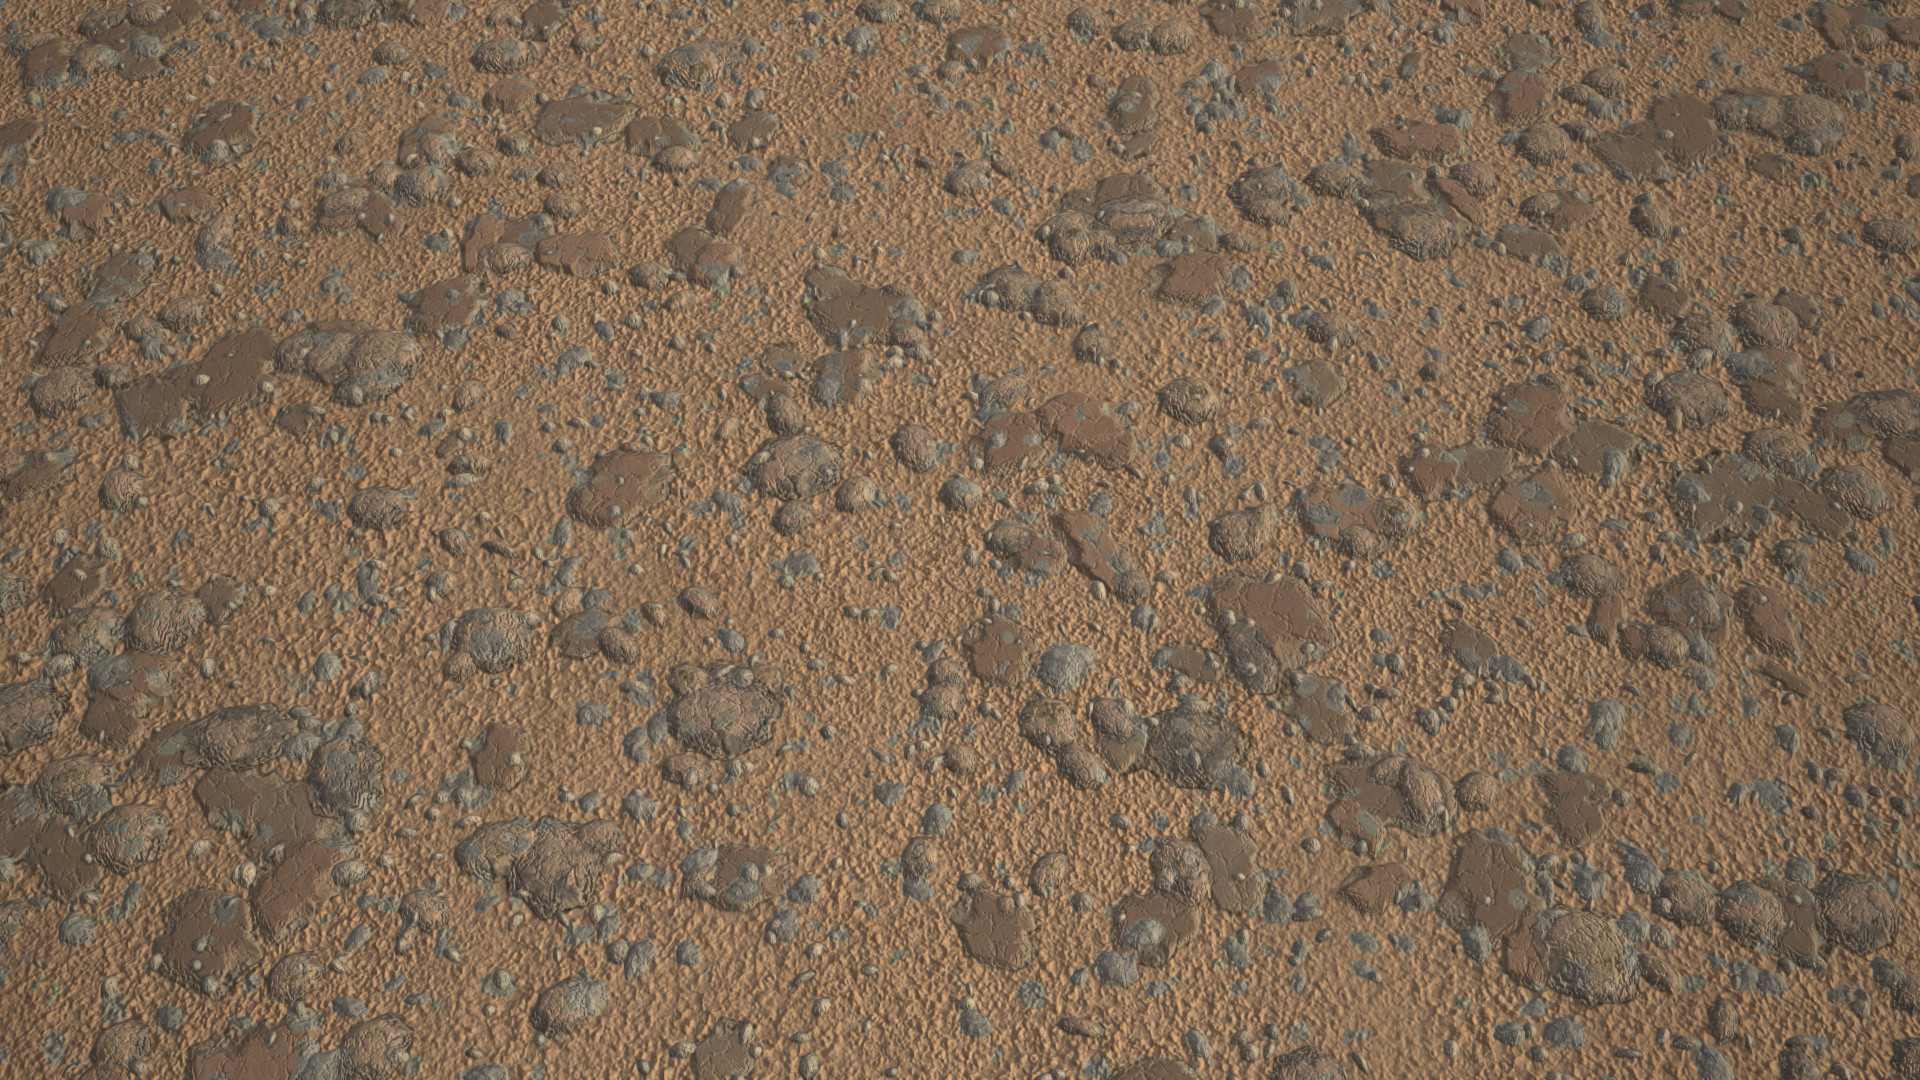 ArtStation - Procedural seamless sand with rocks ground texture ...